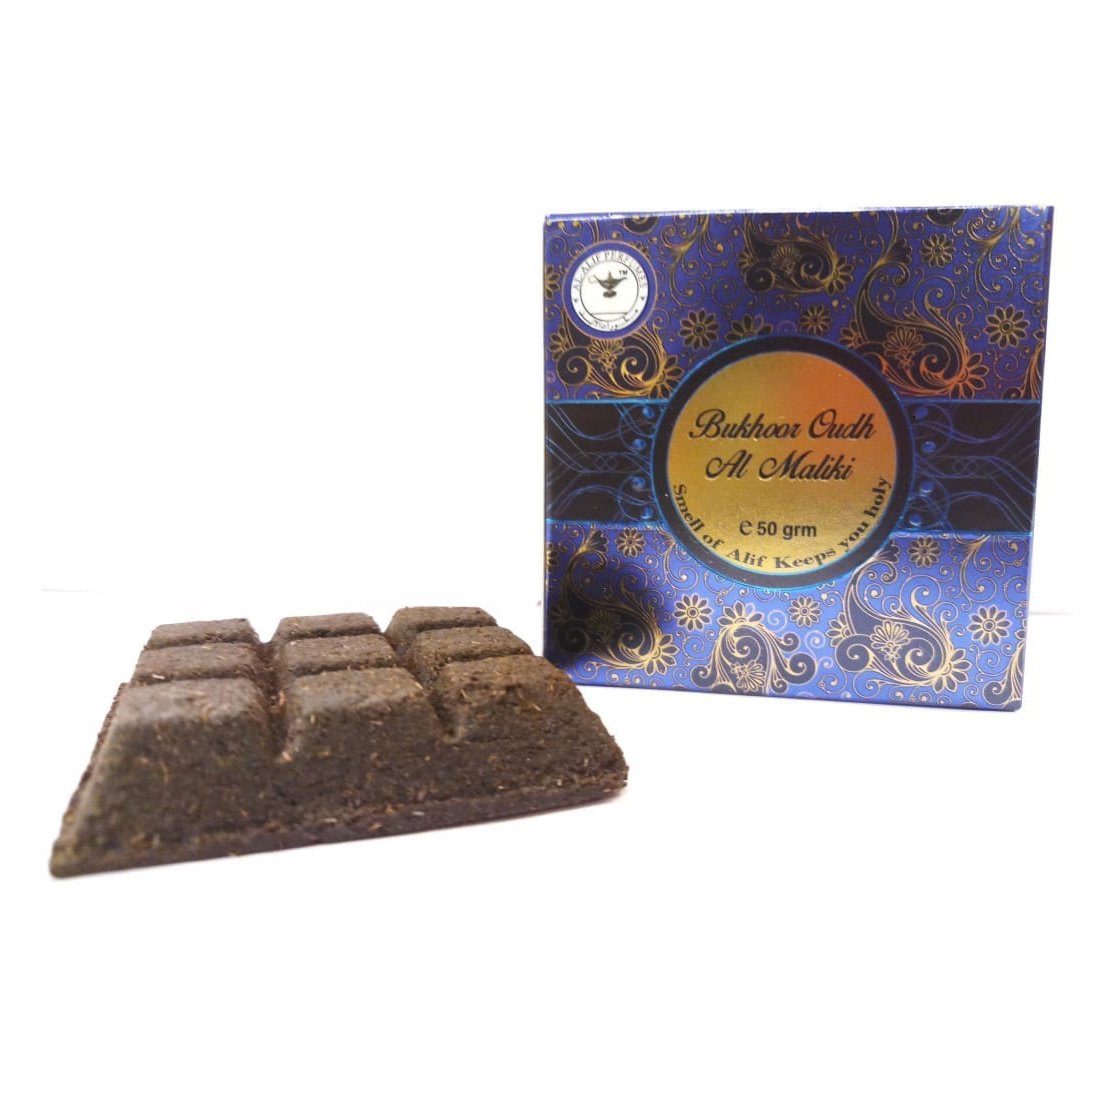 Alif Bukhoor Oudh Al Saeed & Al Maliki Incense Home Fragrance Combo Pack Of 2 x 50g